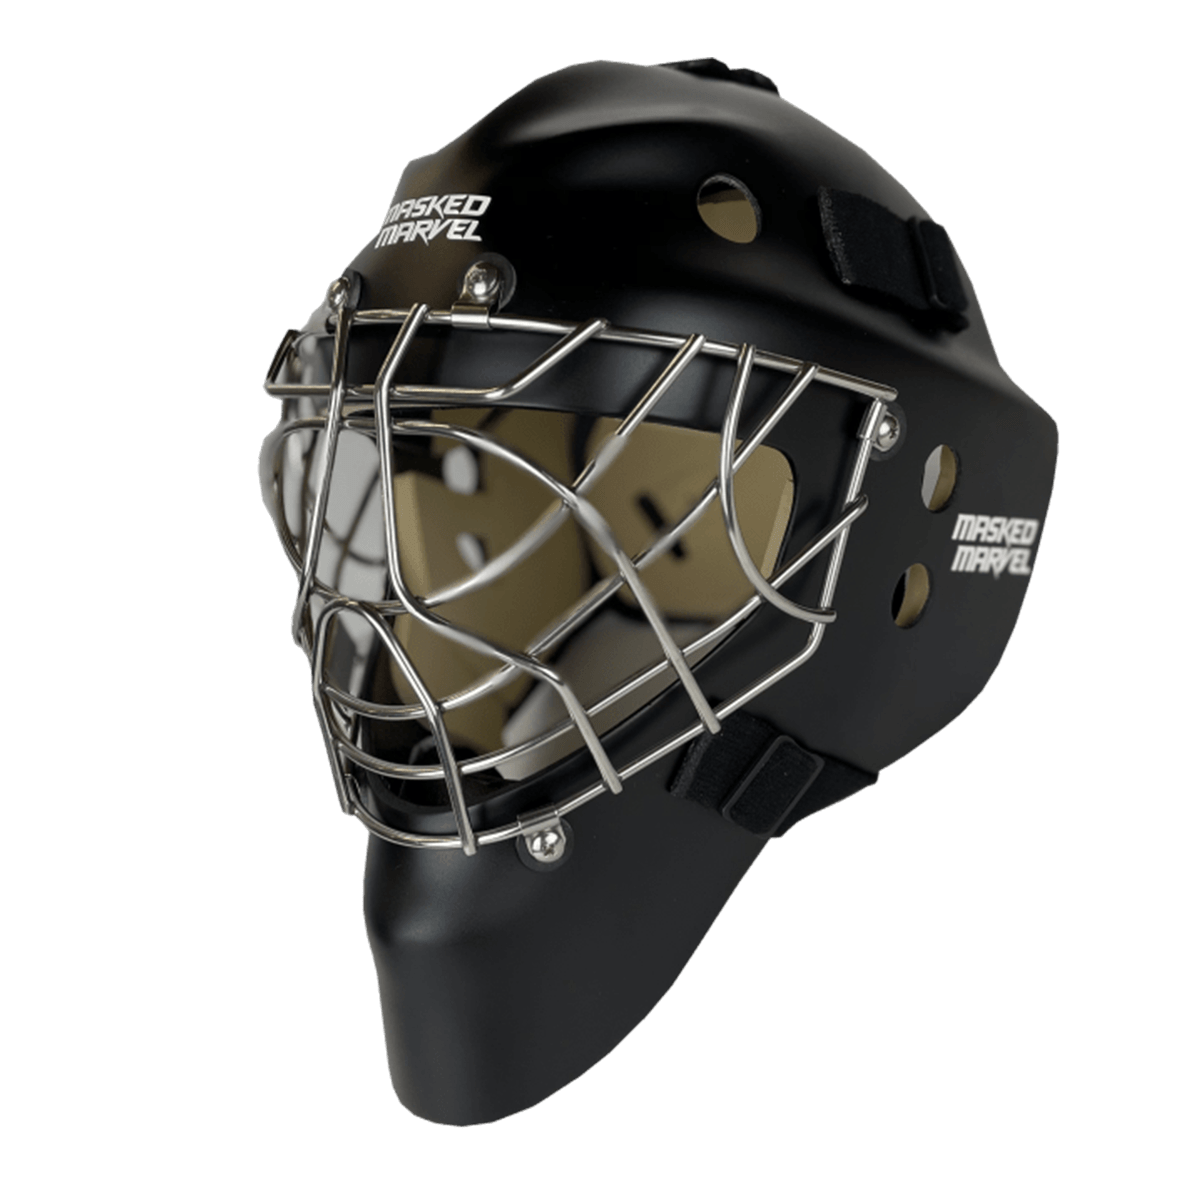 Masked Marvel Goalie Helmets » Its Your Head - You Decide!